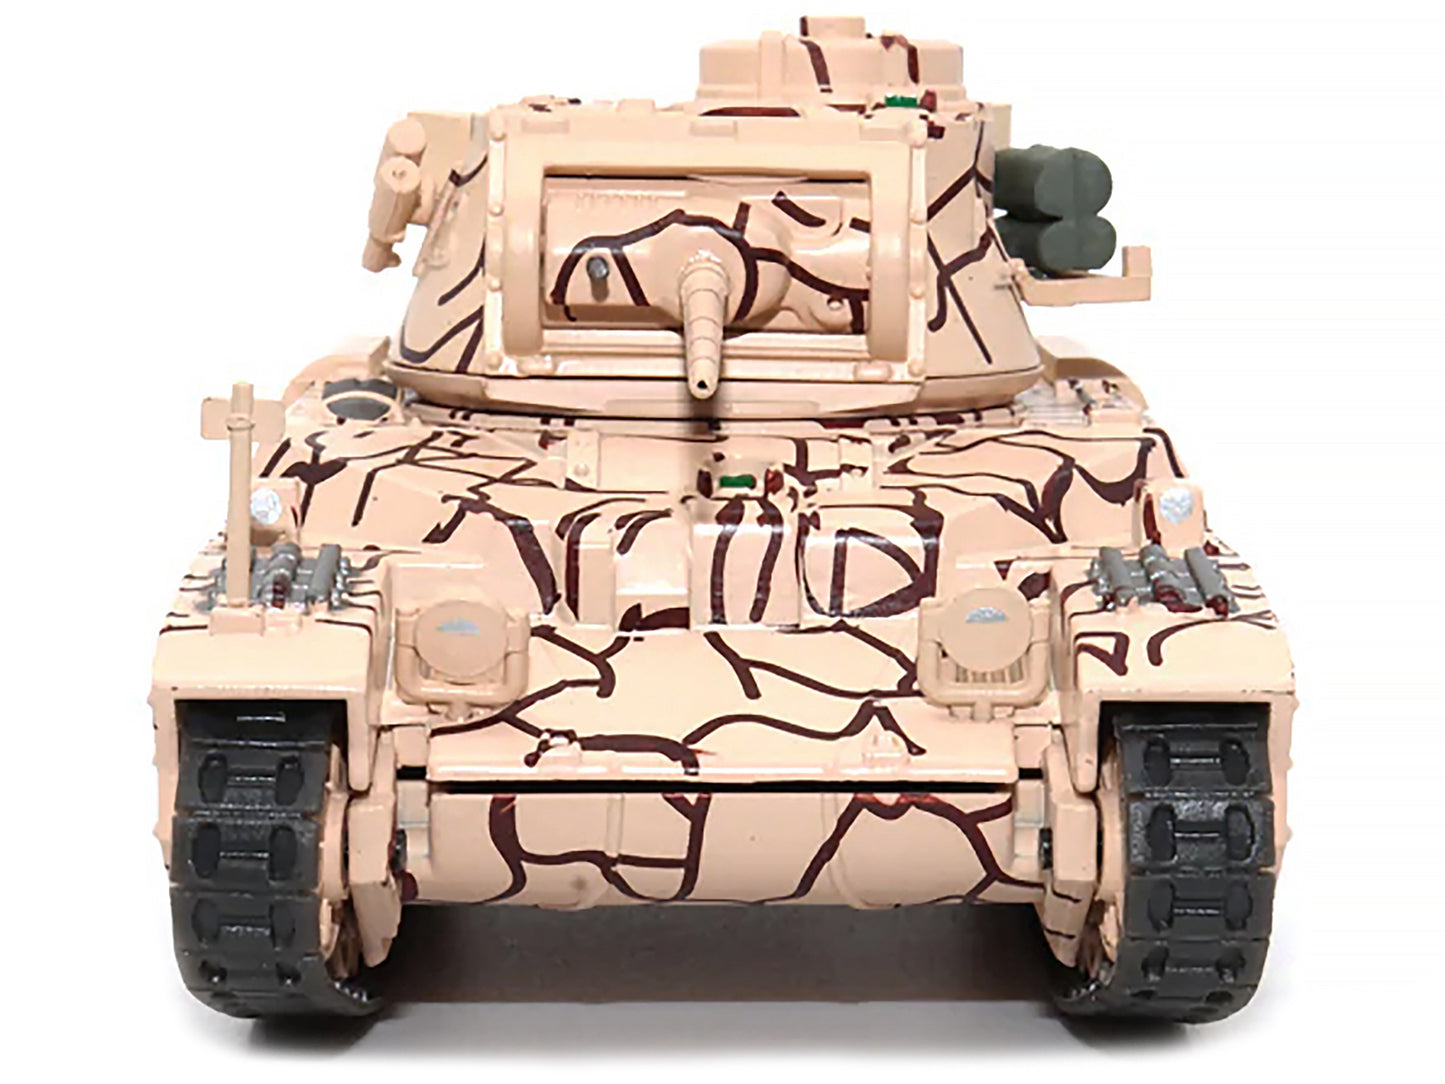 infantry tank mk matilda iii griffin malta squadron regiment 1/43 diecast model